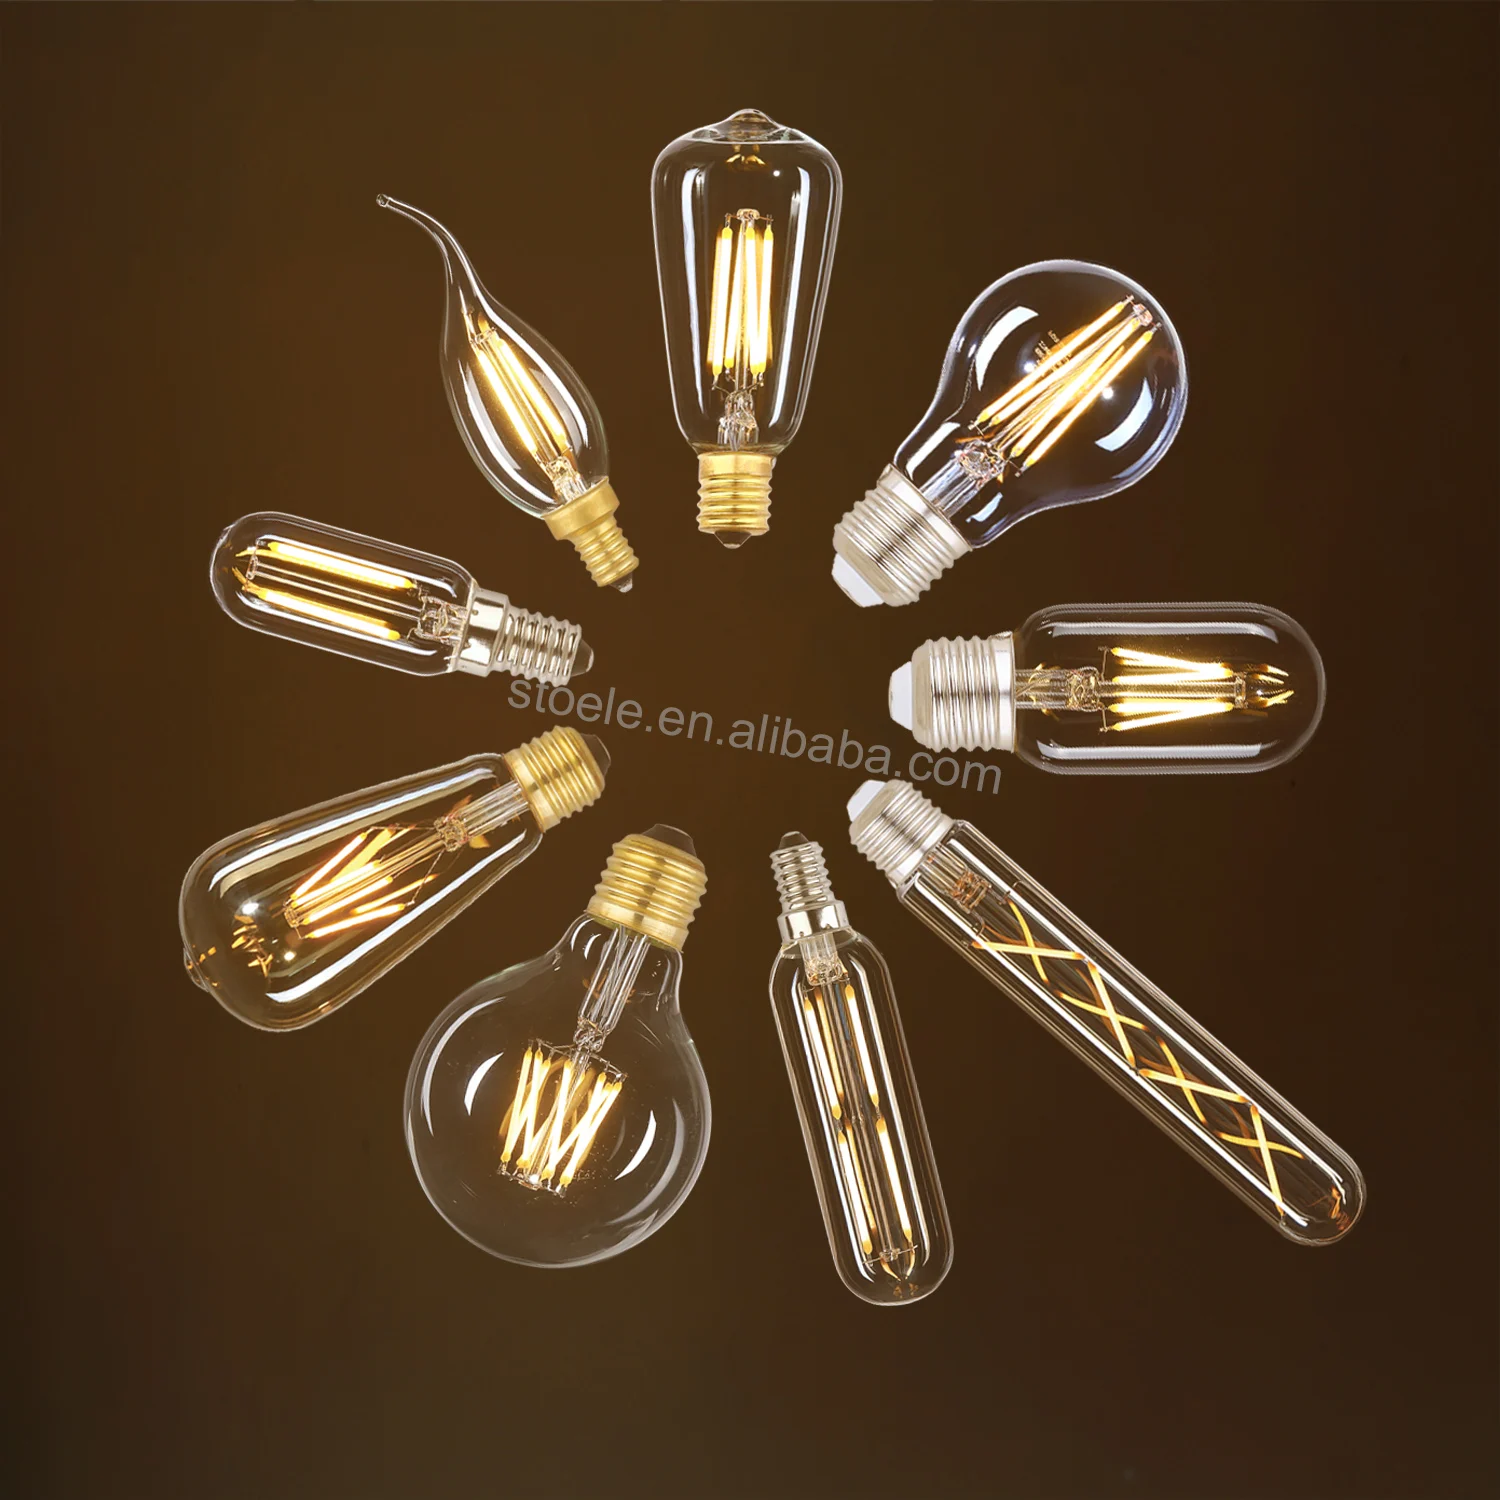 Home chandelier lighting C7 C32 C35 CA10 B10 B11 P45 edison candle LED filament bulb